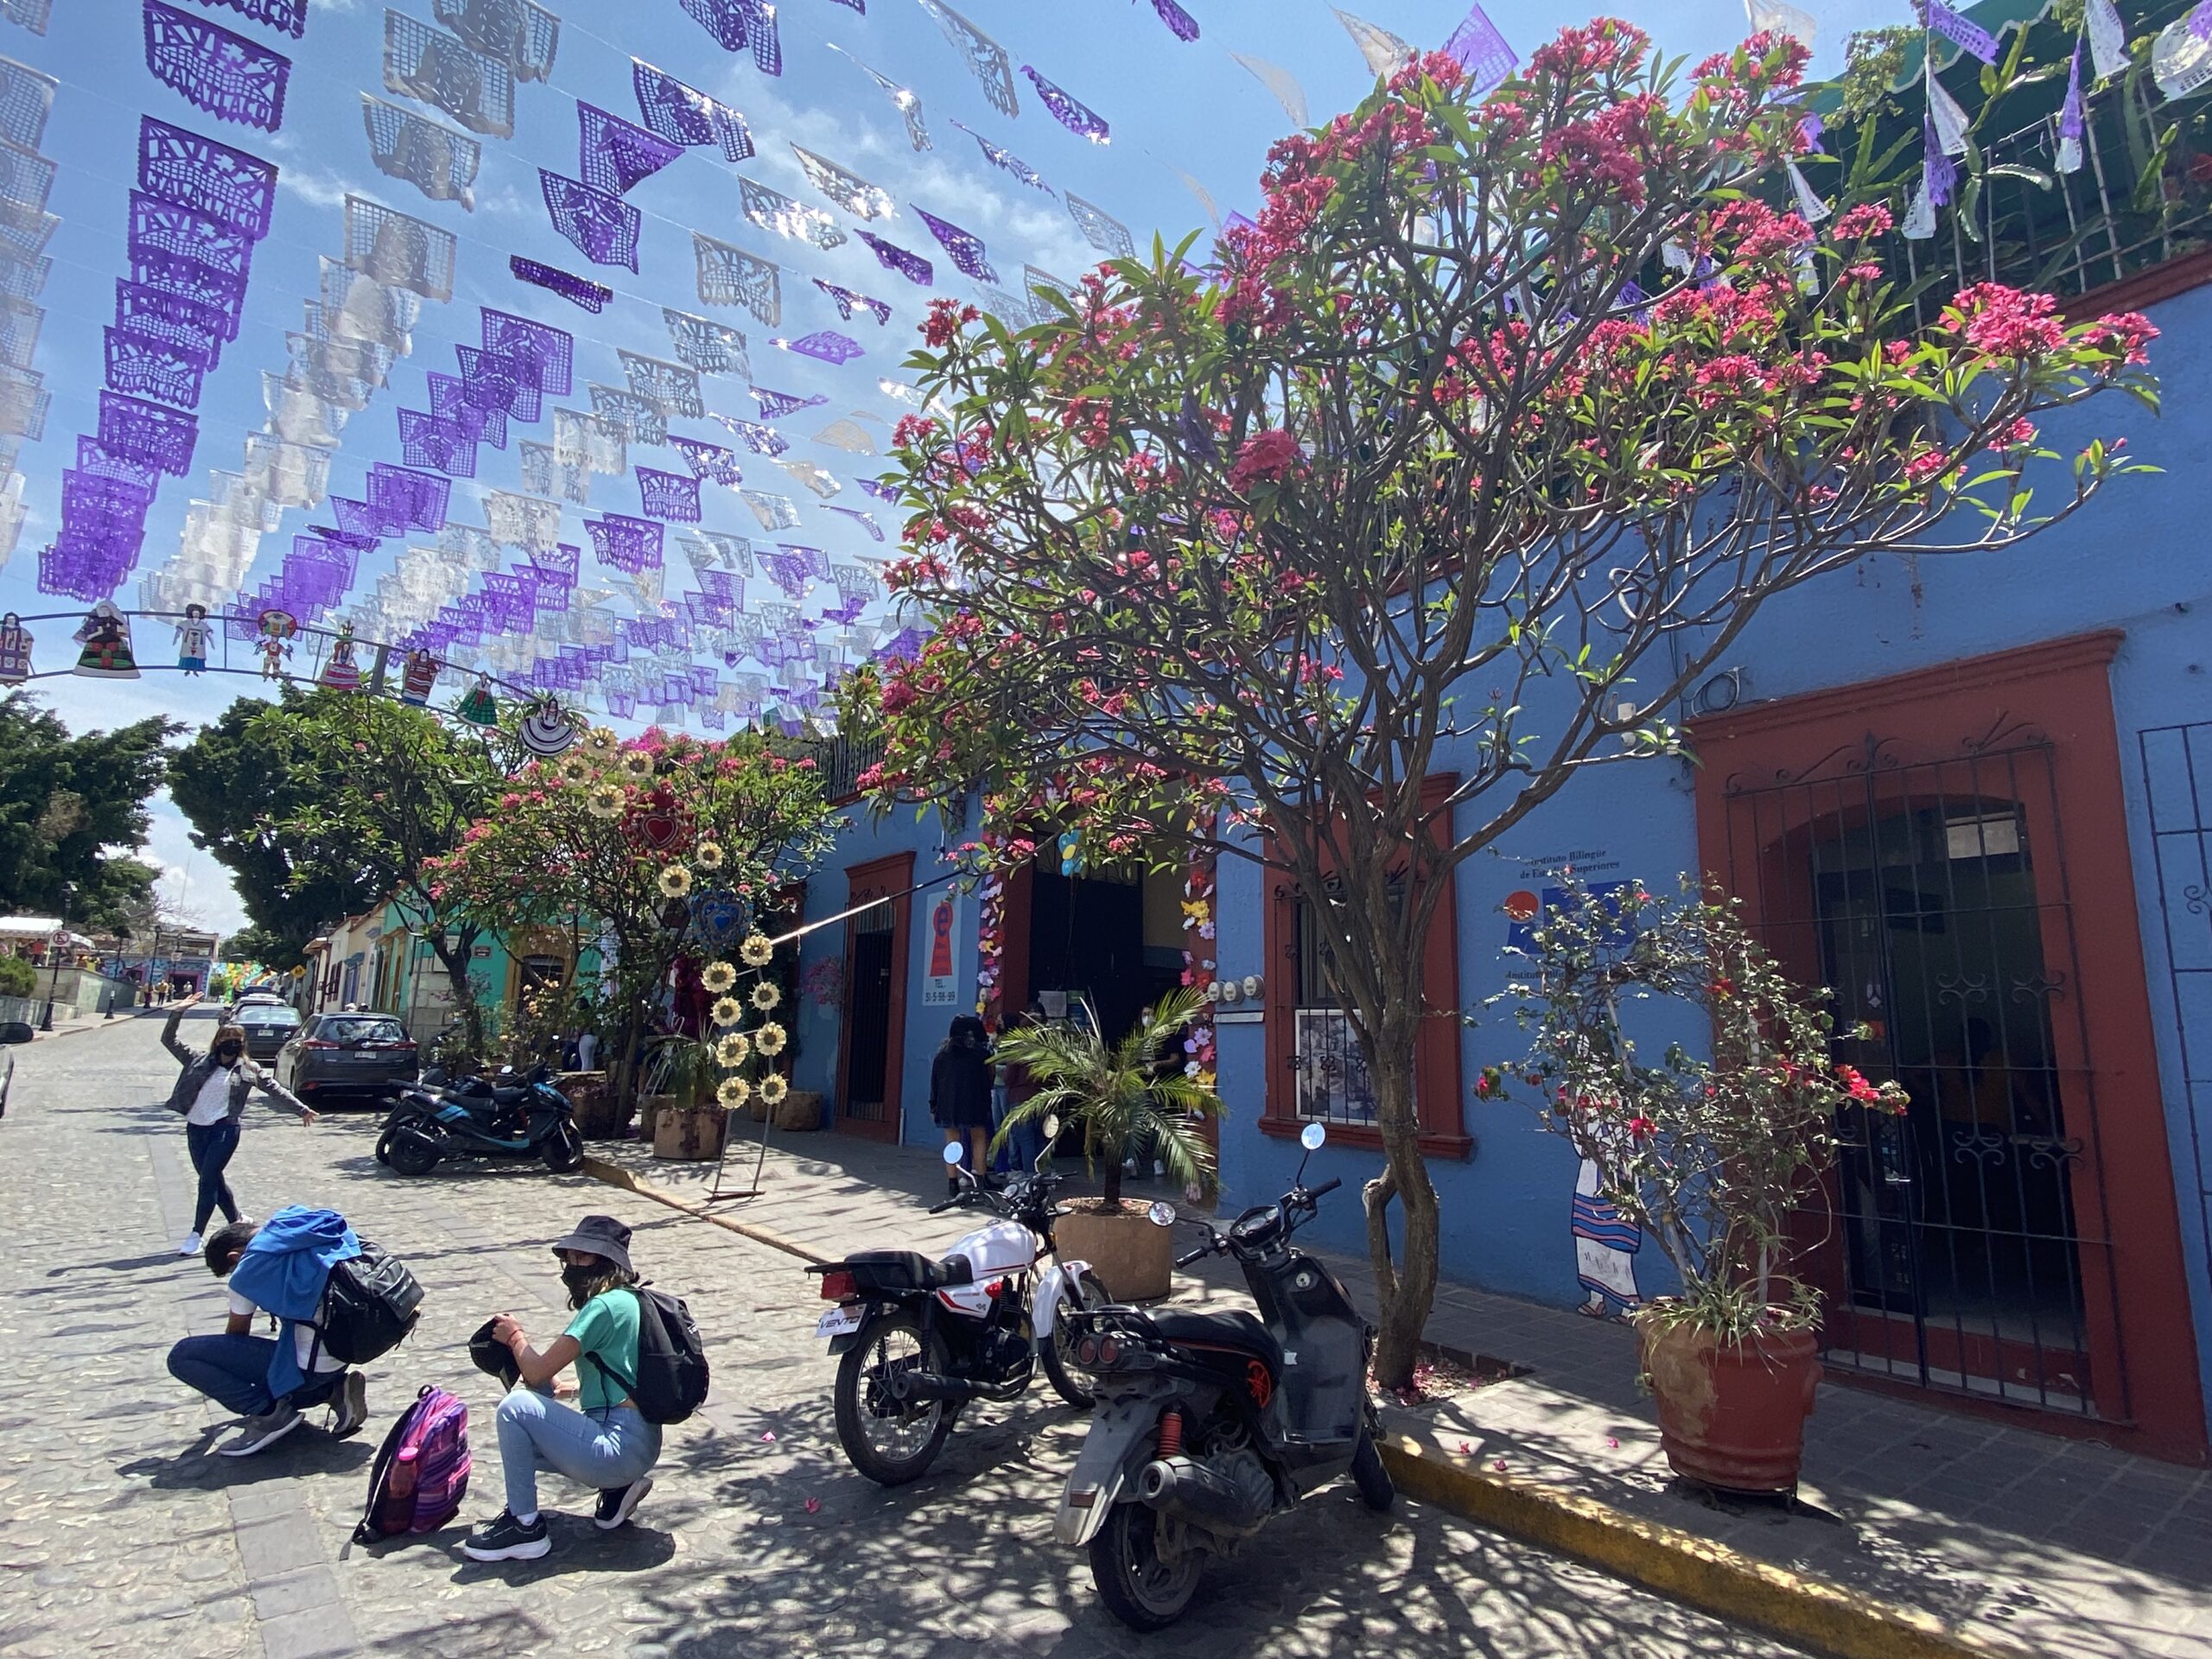 Colour streets of Oaxaca